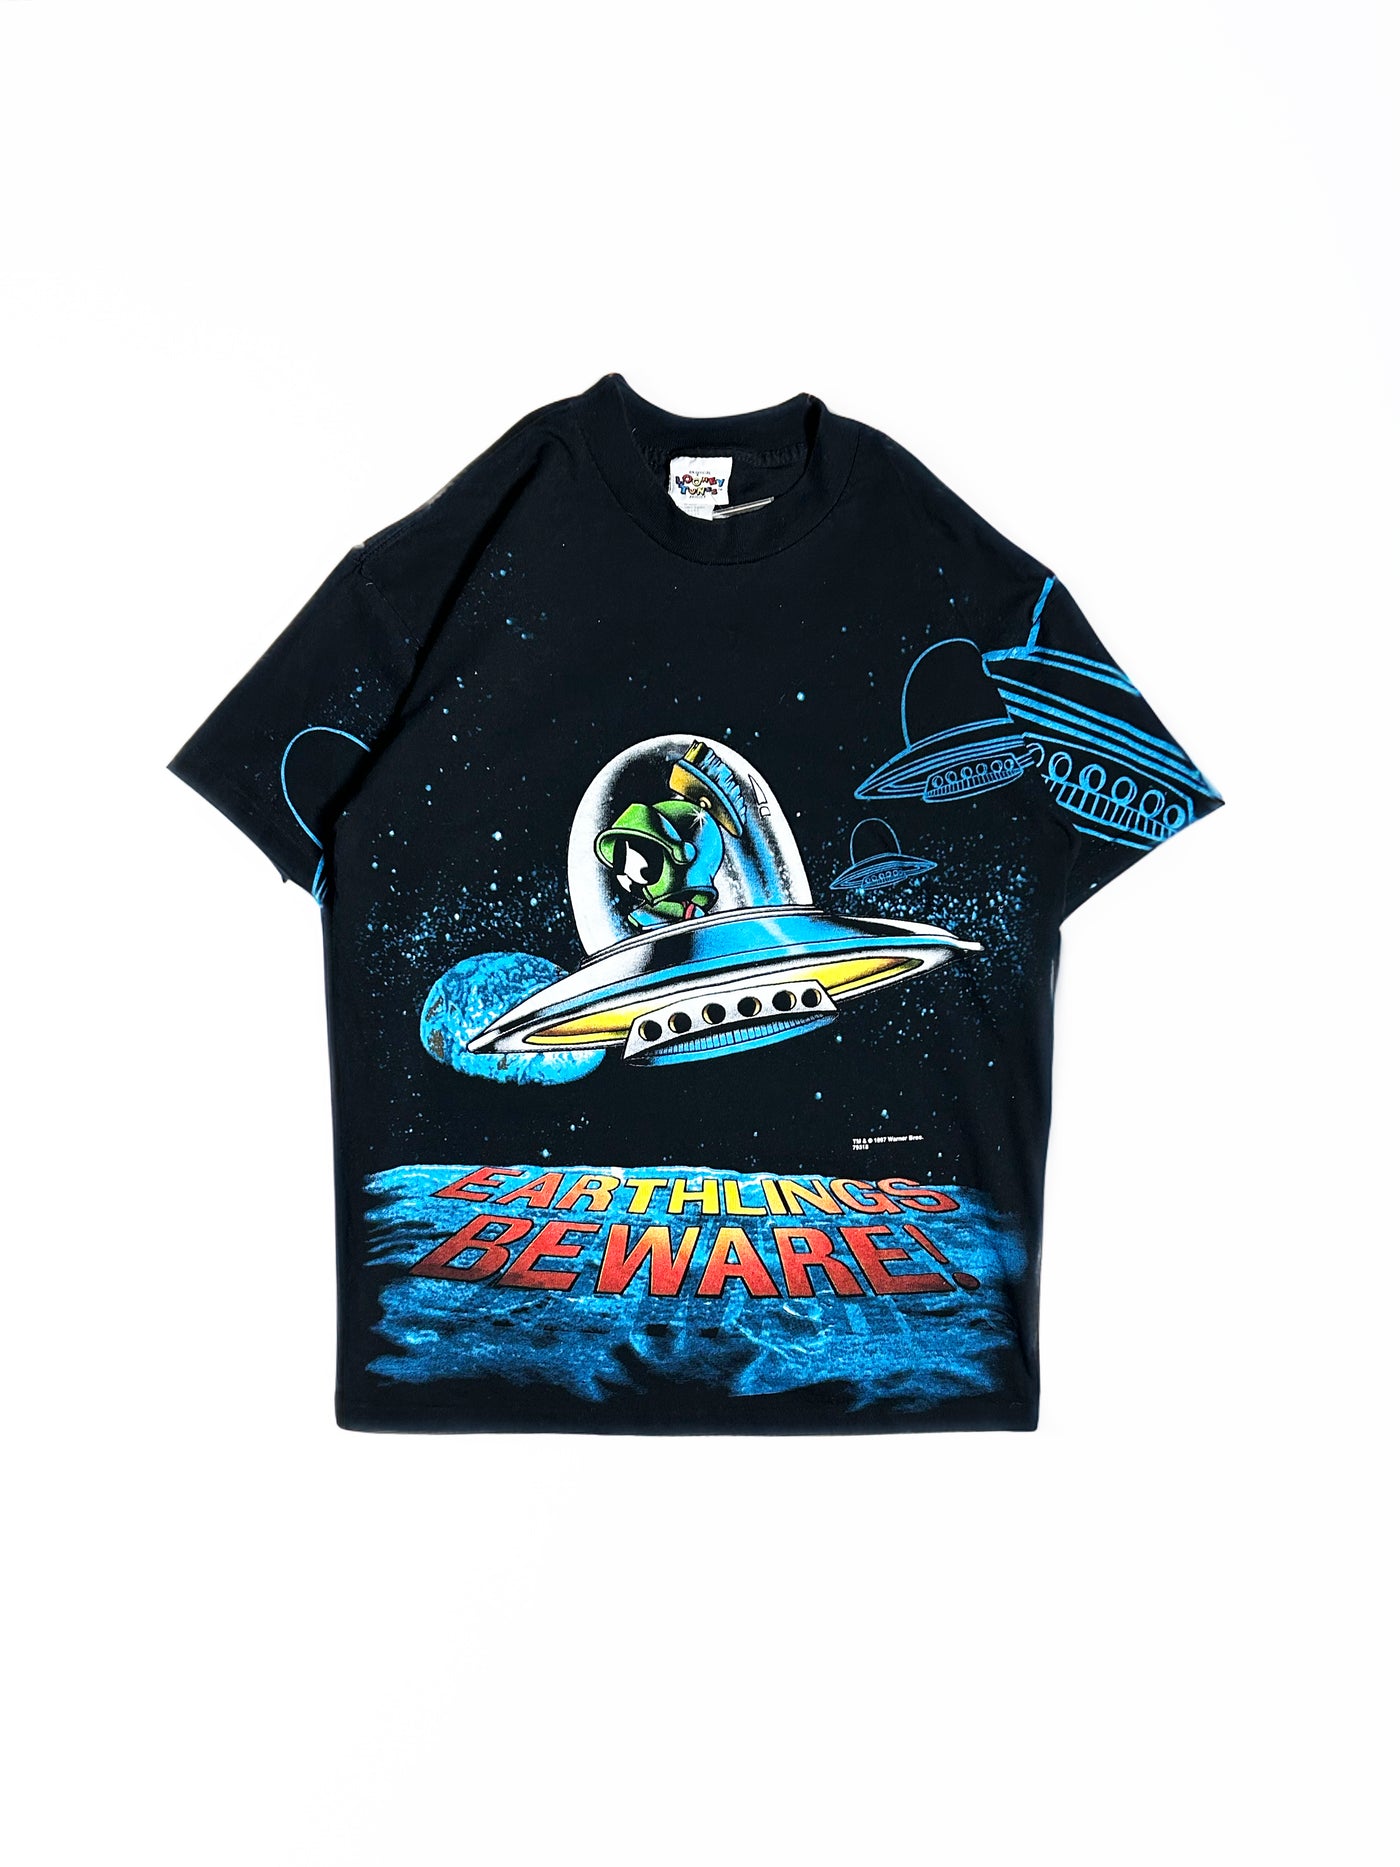 Vintage 1997 Marvin the Martian 'Earthlings Beware' T-Shirt